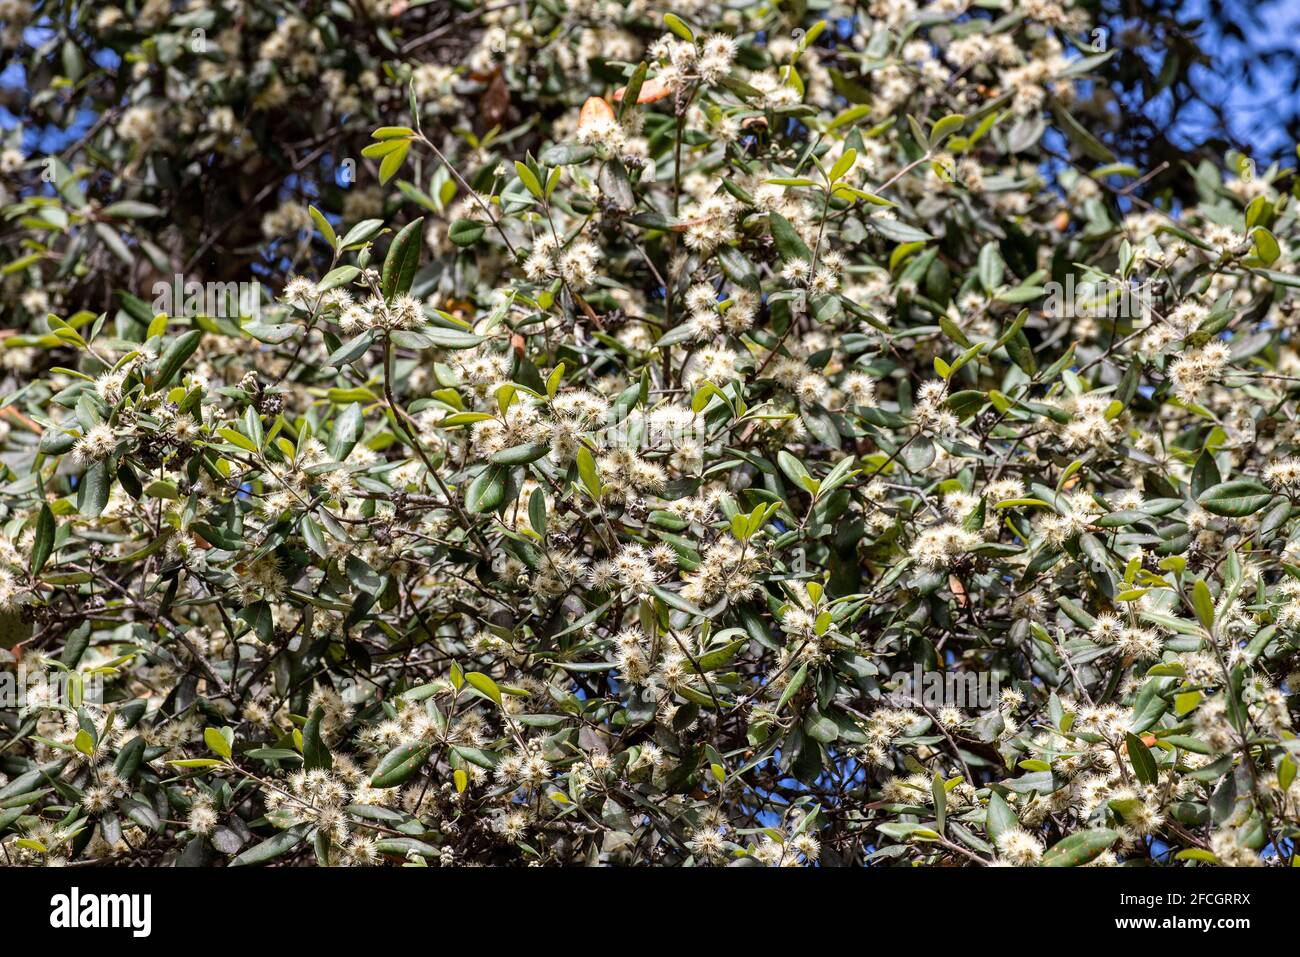 Australian Turpentine Tree in flower Stock Photo